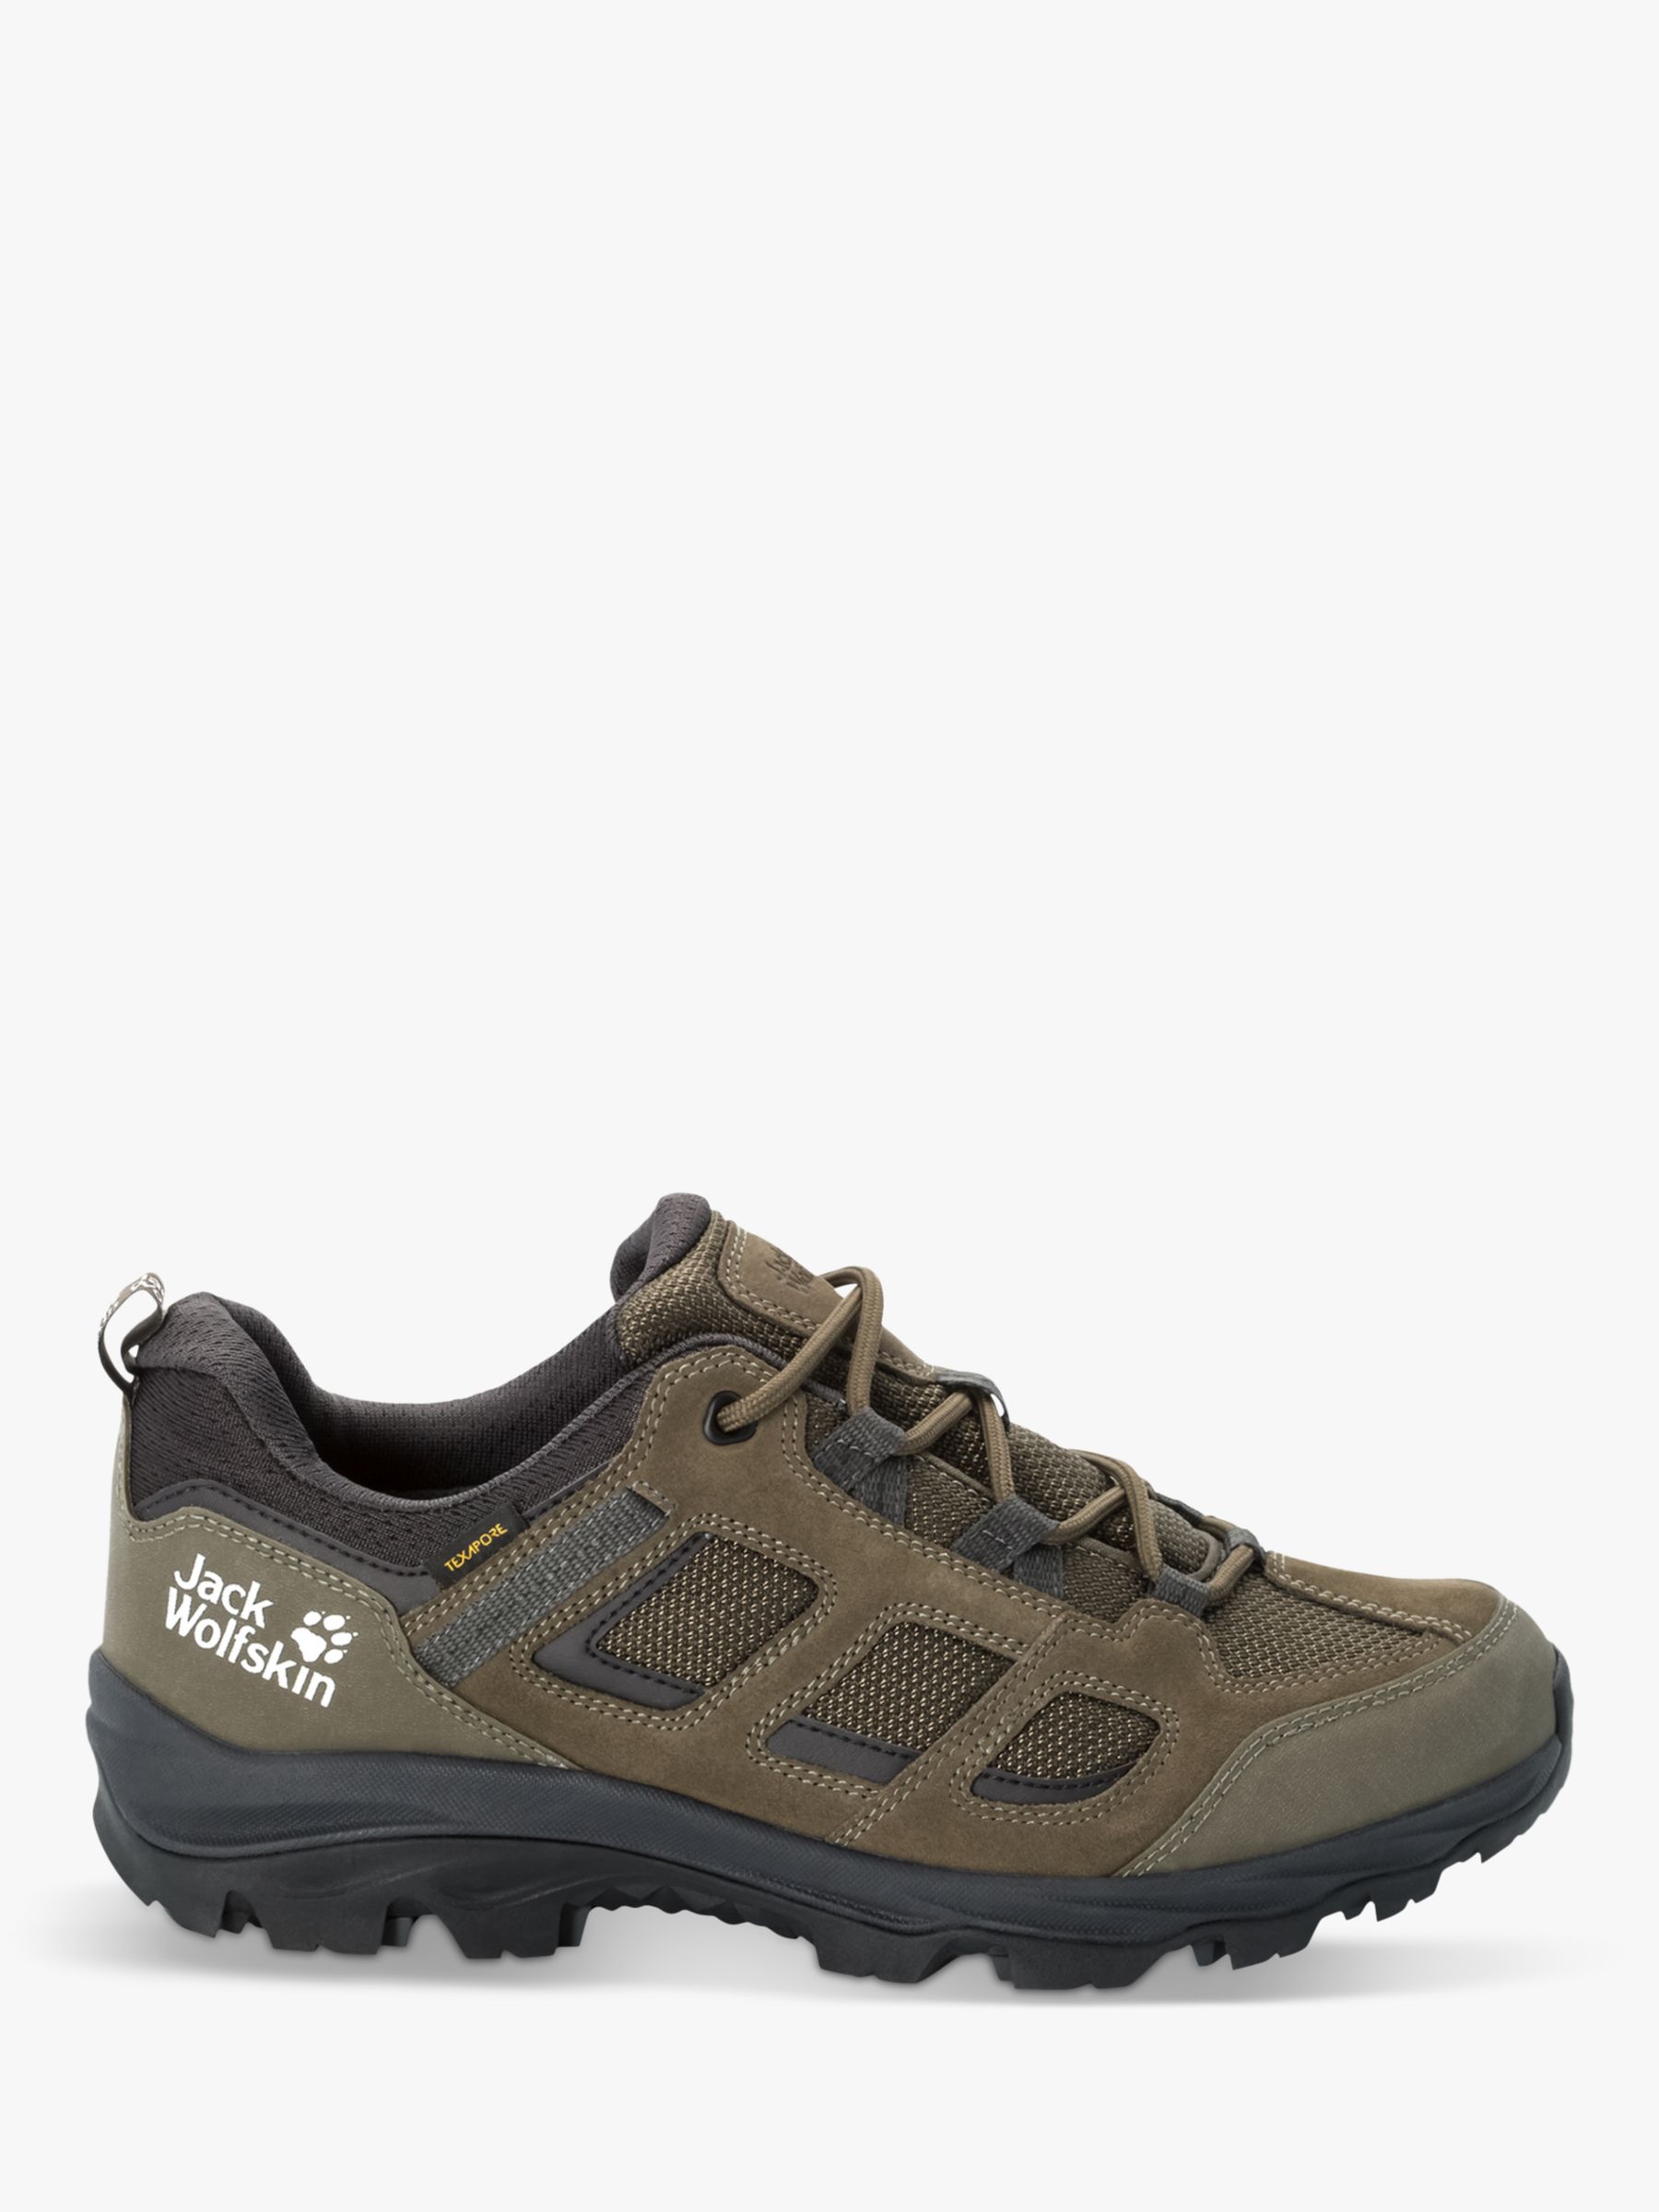 Jack Wolfskin Vojo 3 Texapore Waterproof Walking Shoes, Brown/Phantom at John Lewis & Partners